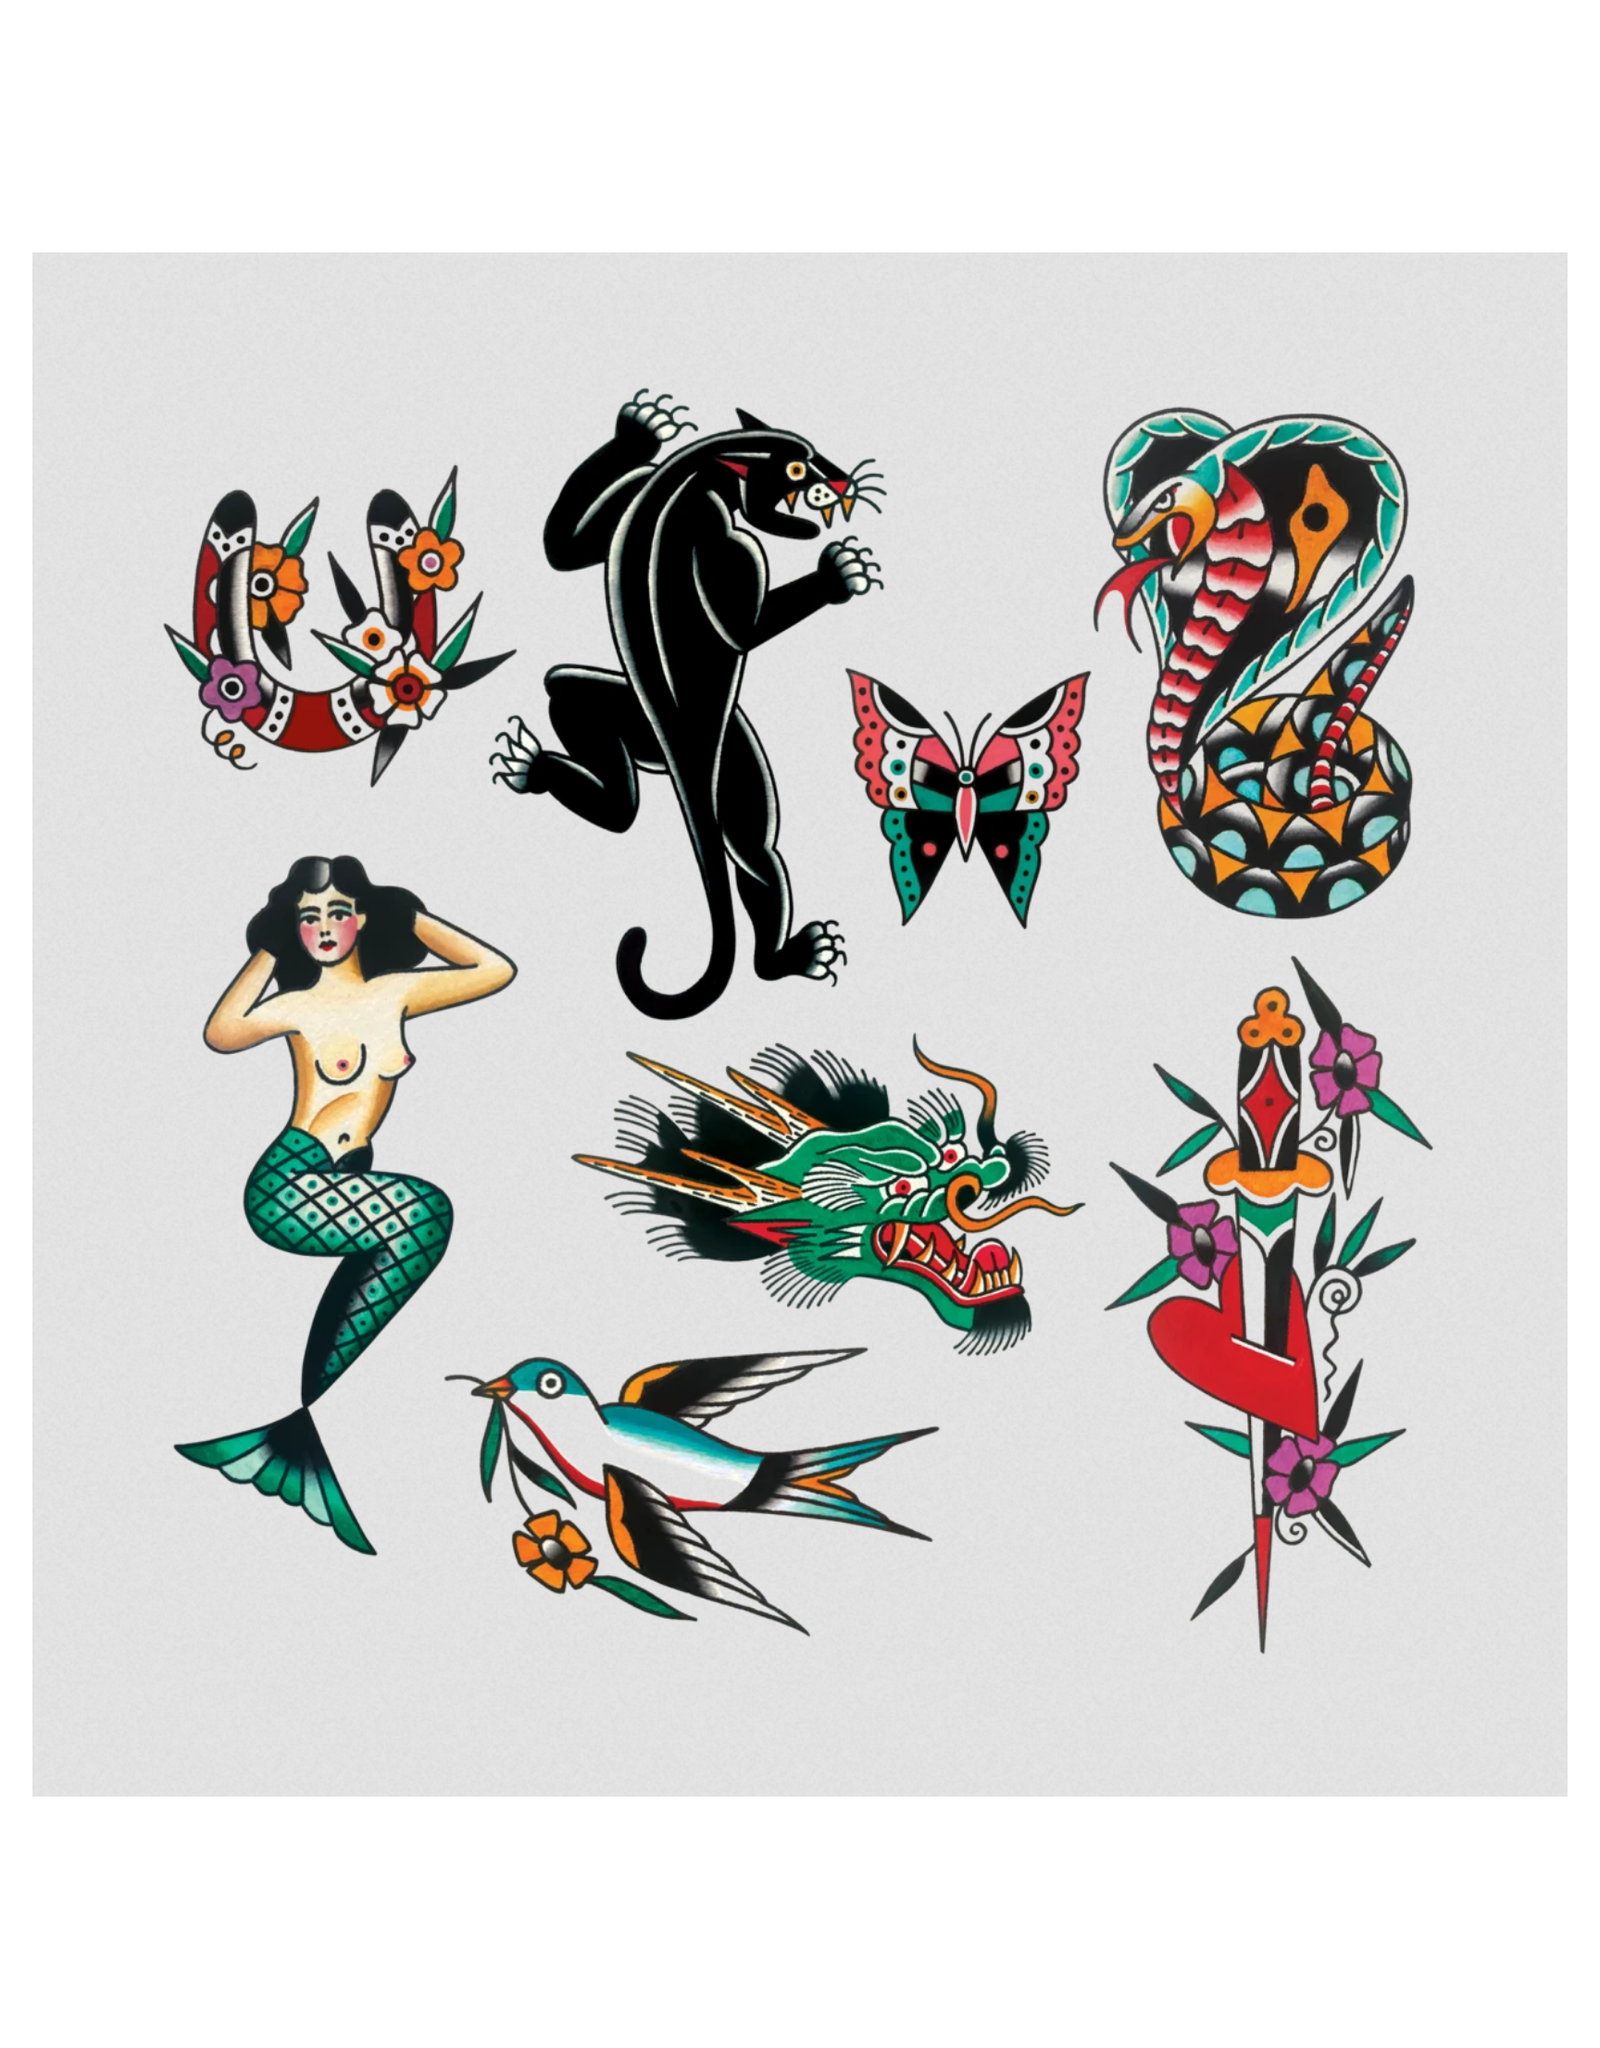 Dragon by Jessi Preston from Tattly Temporary Tattoos – Tattly Temporary  Tattoos & Stickers